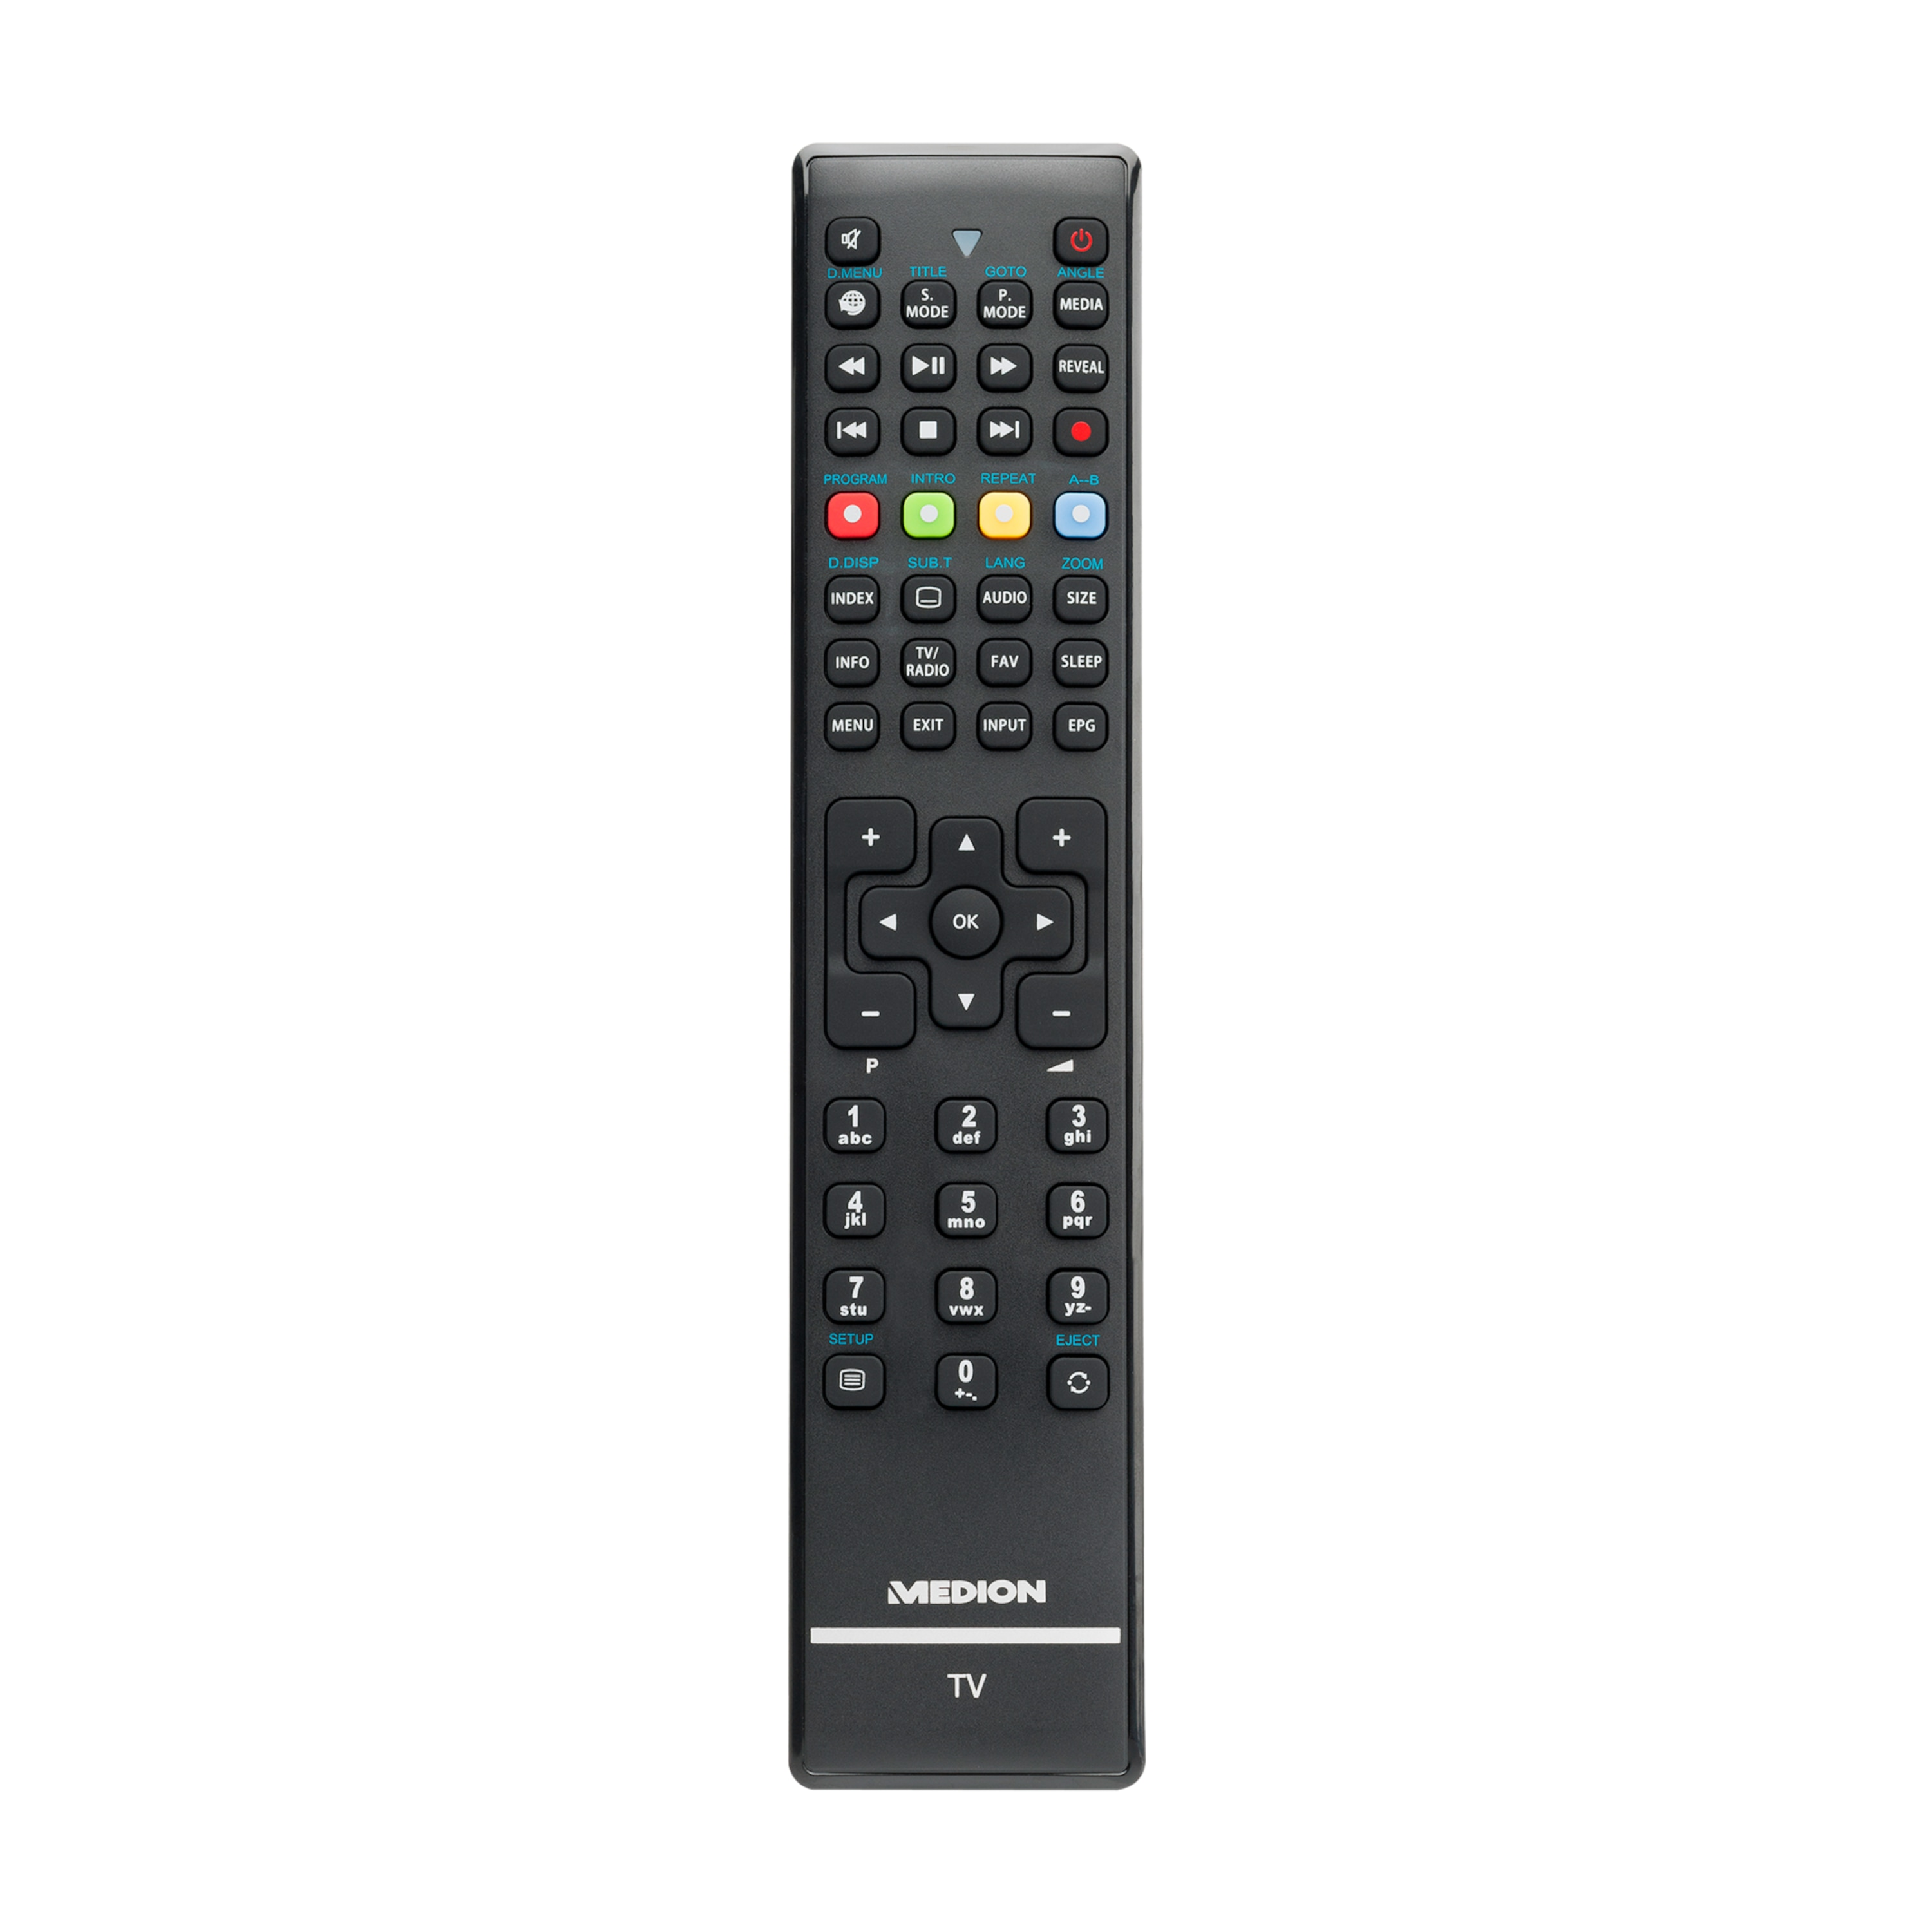 MEDION LIFE® E12421 Fernseher (Flat, Zoll / 23,6 cm, Full-HD) 59,9